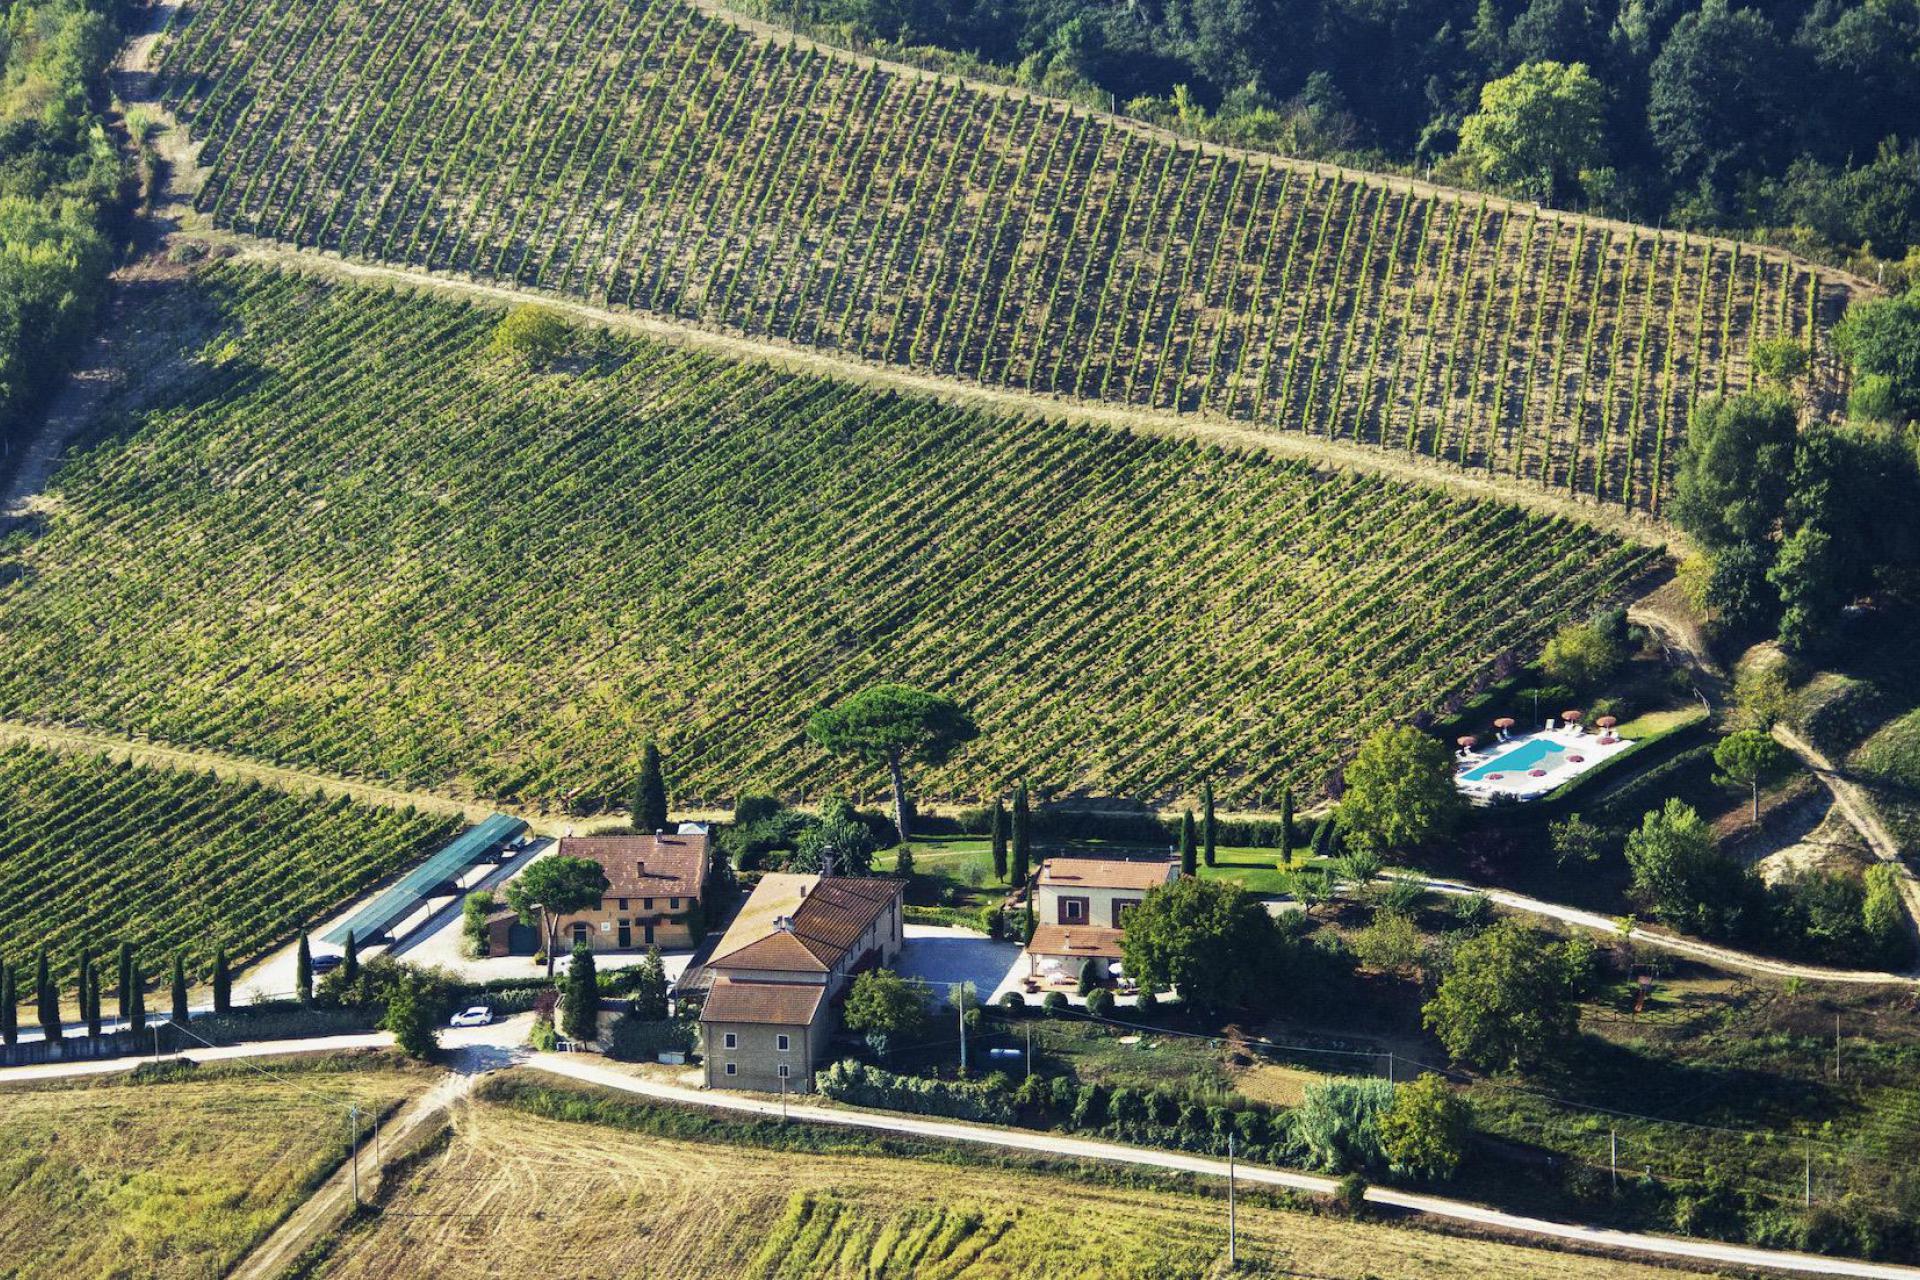 Agriturismo Toscana Agriturismo per famiglie con grande piscina e piscina per bambini